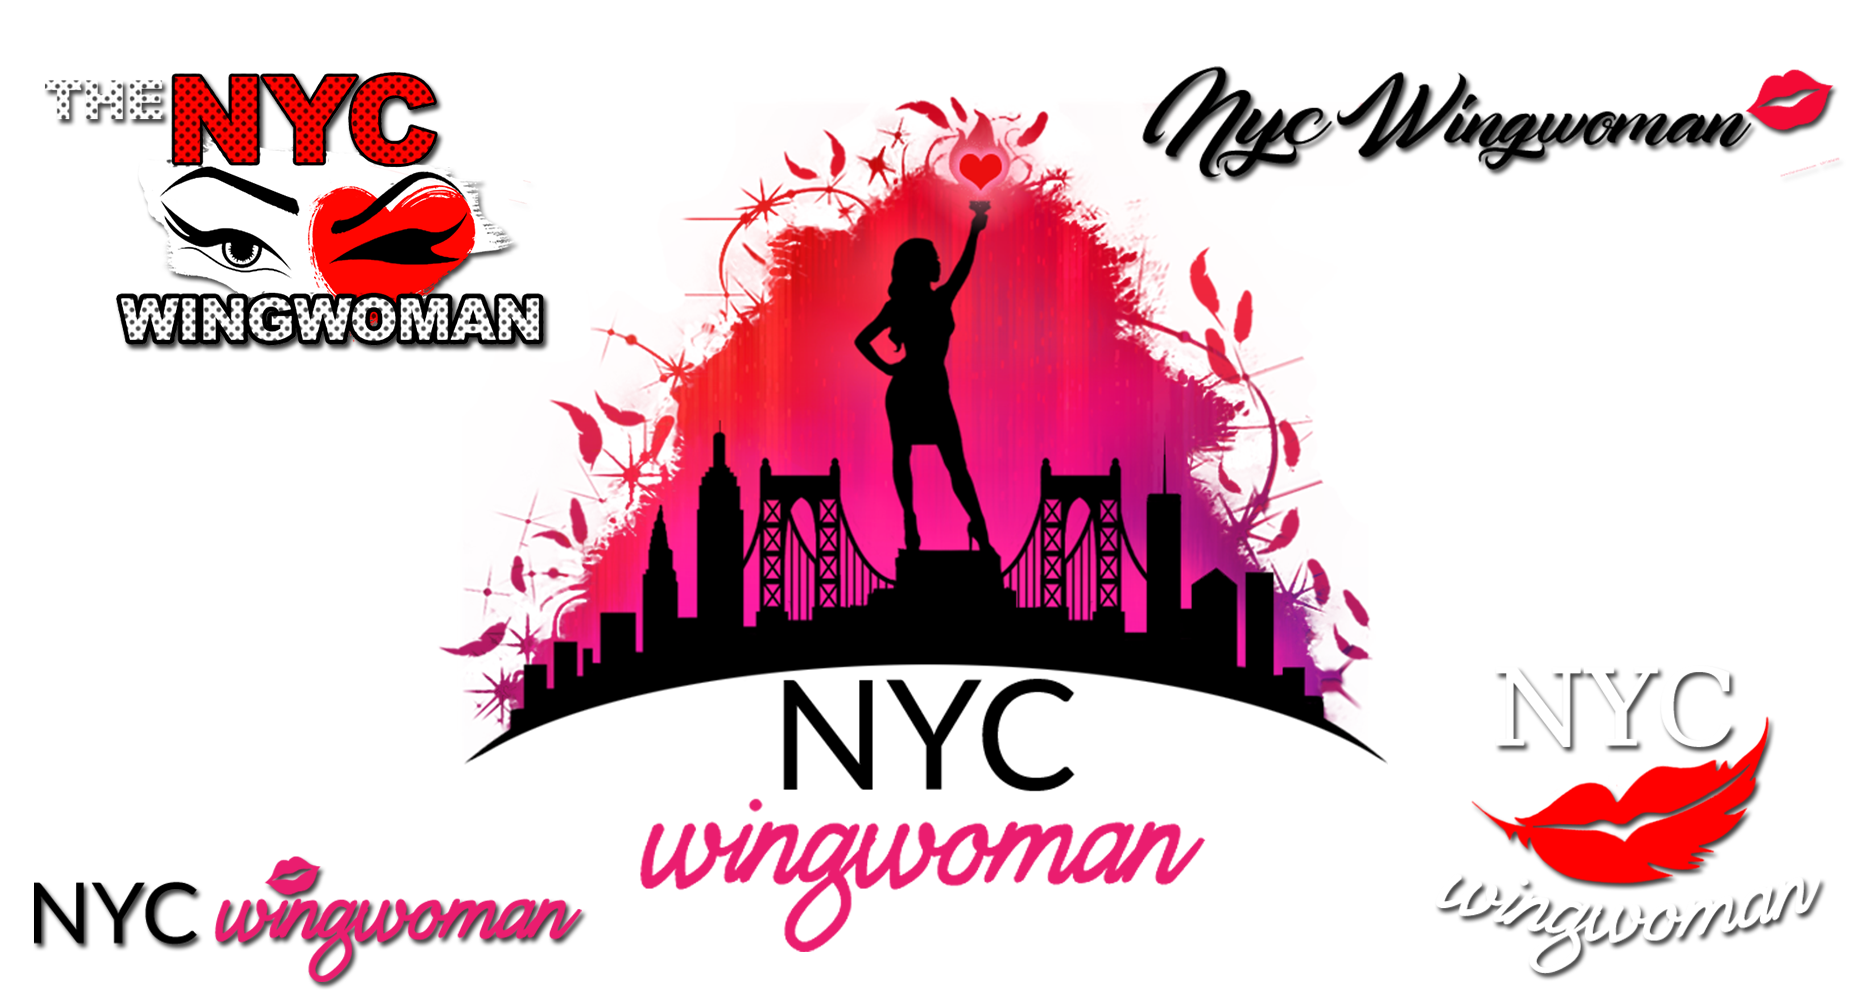 NYC_Wingwoman_01